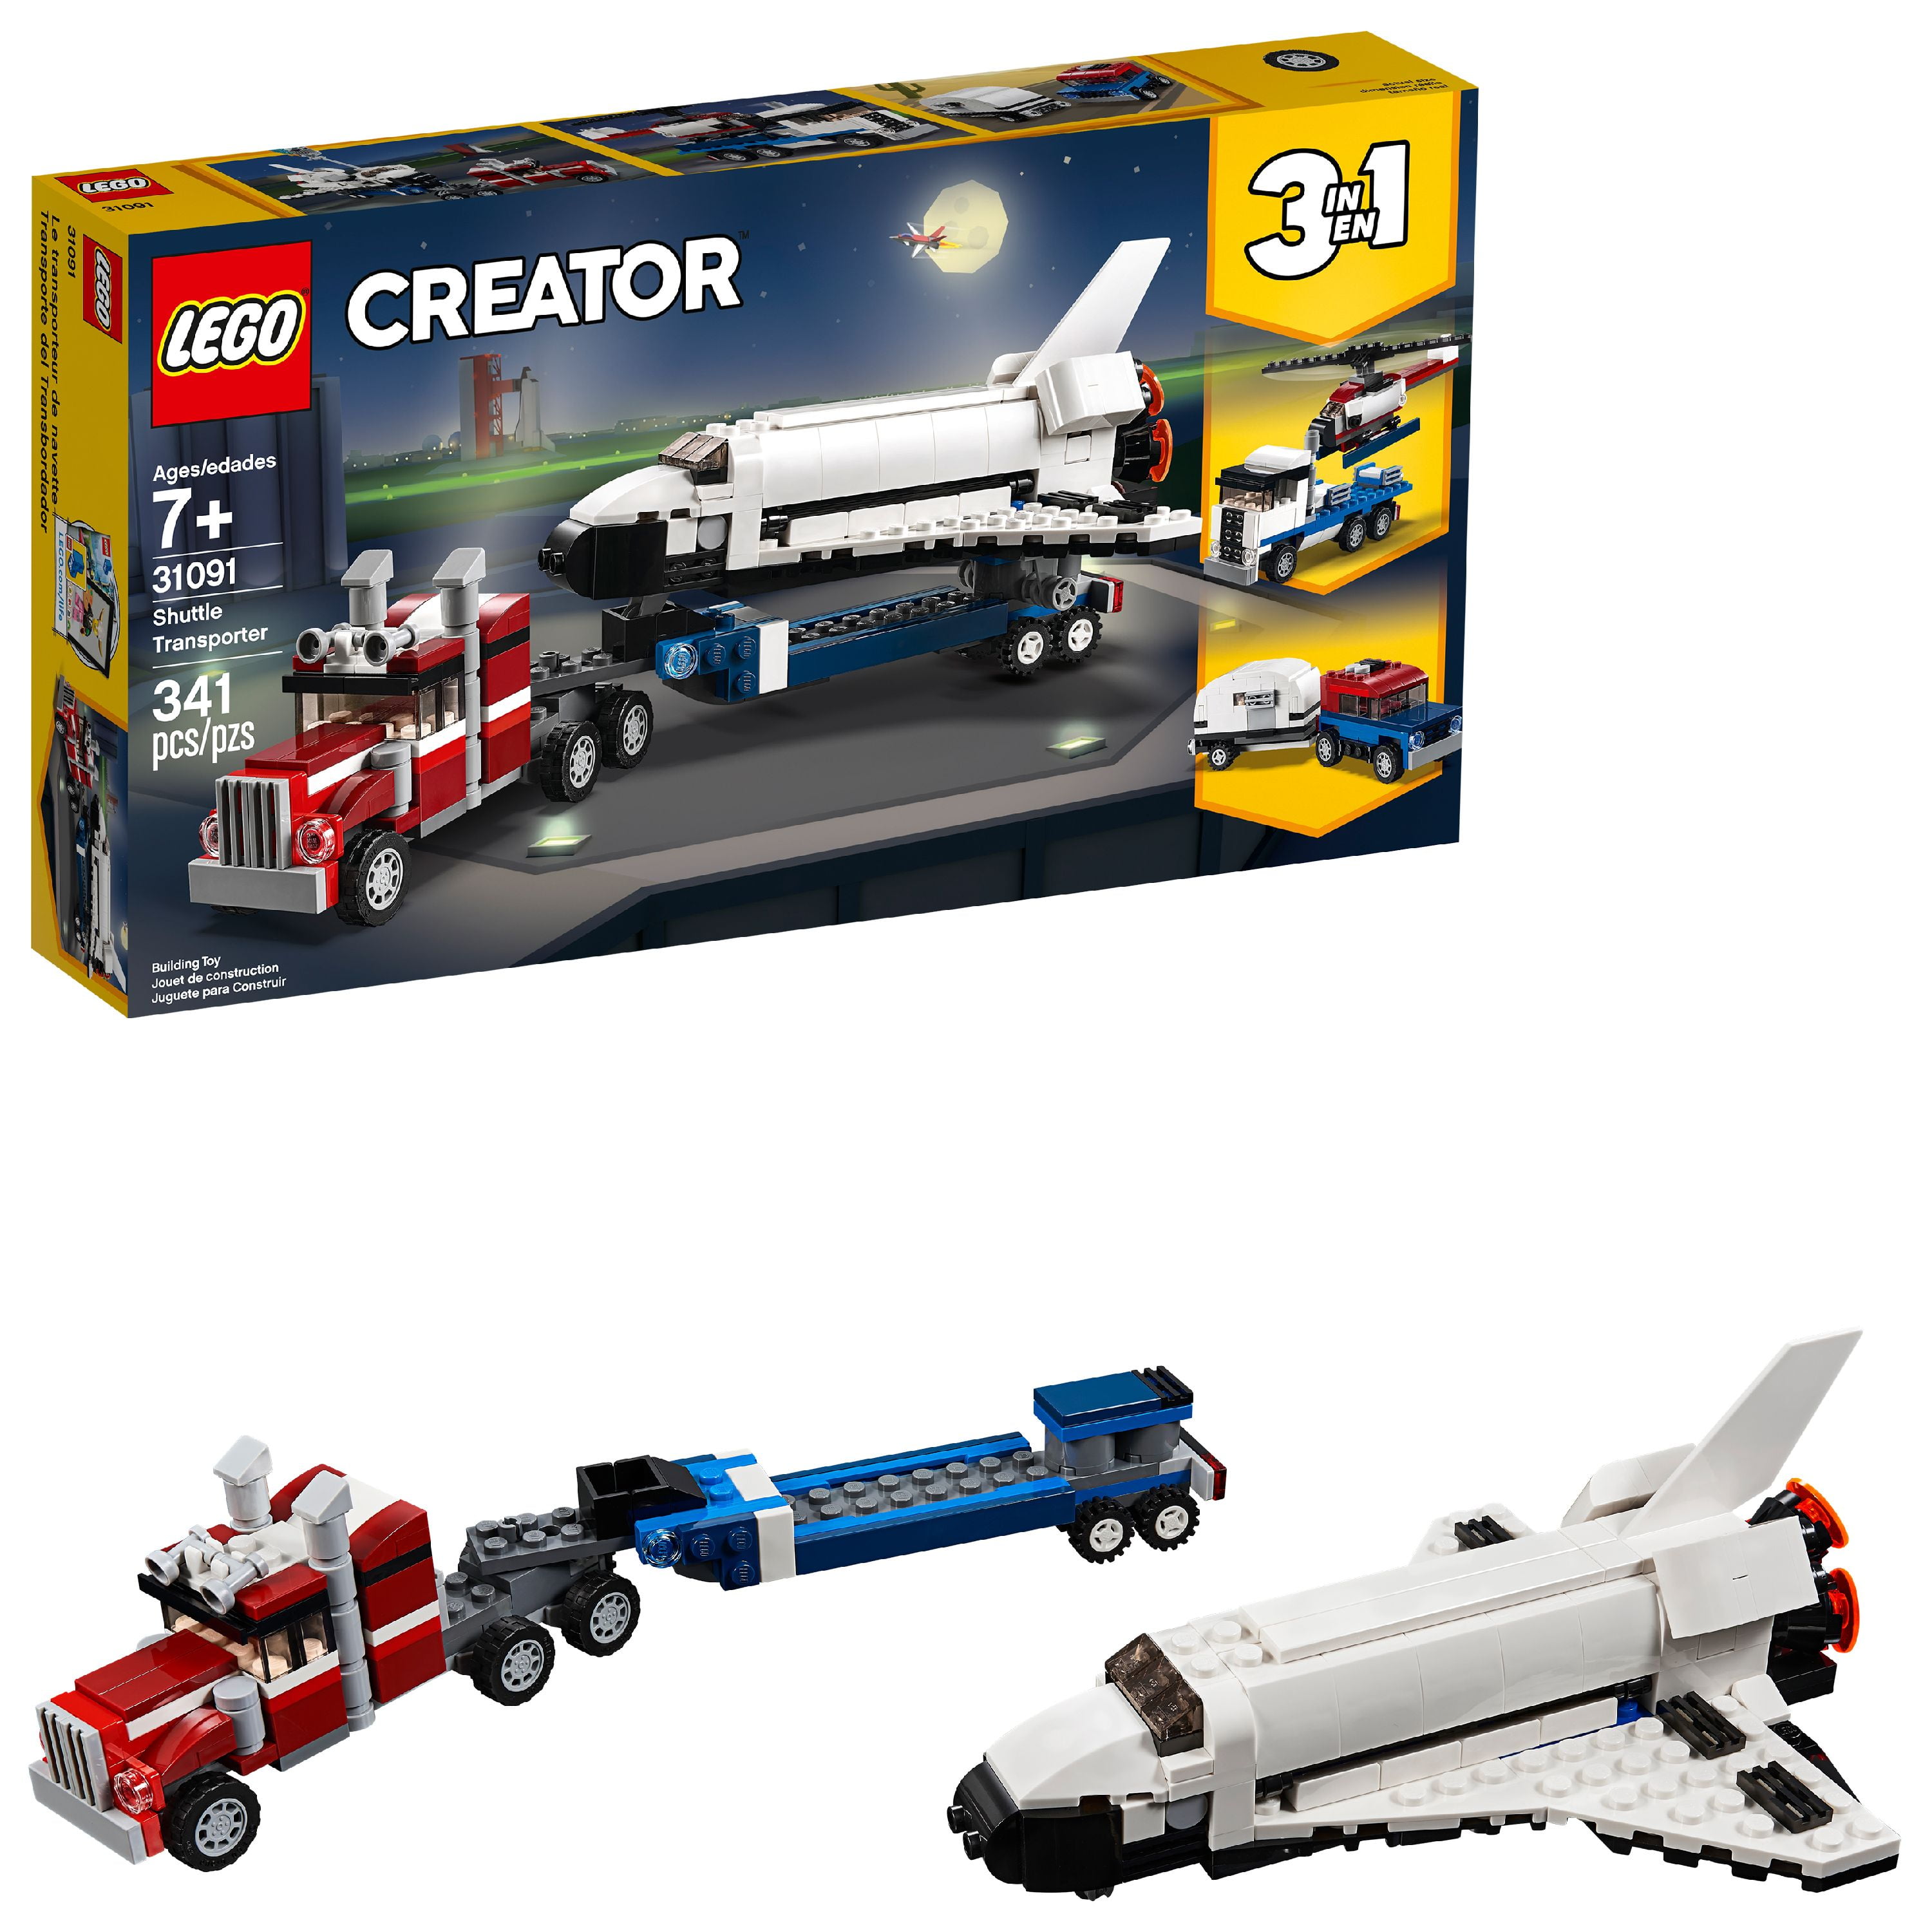 LEGO Astronaut Minifigure with Jetpack 31066 Space Shuttle Explorer